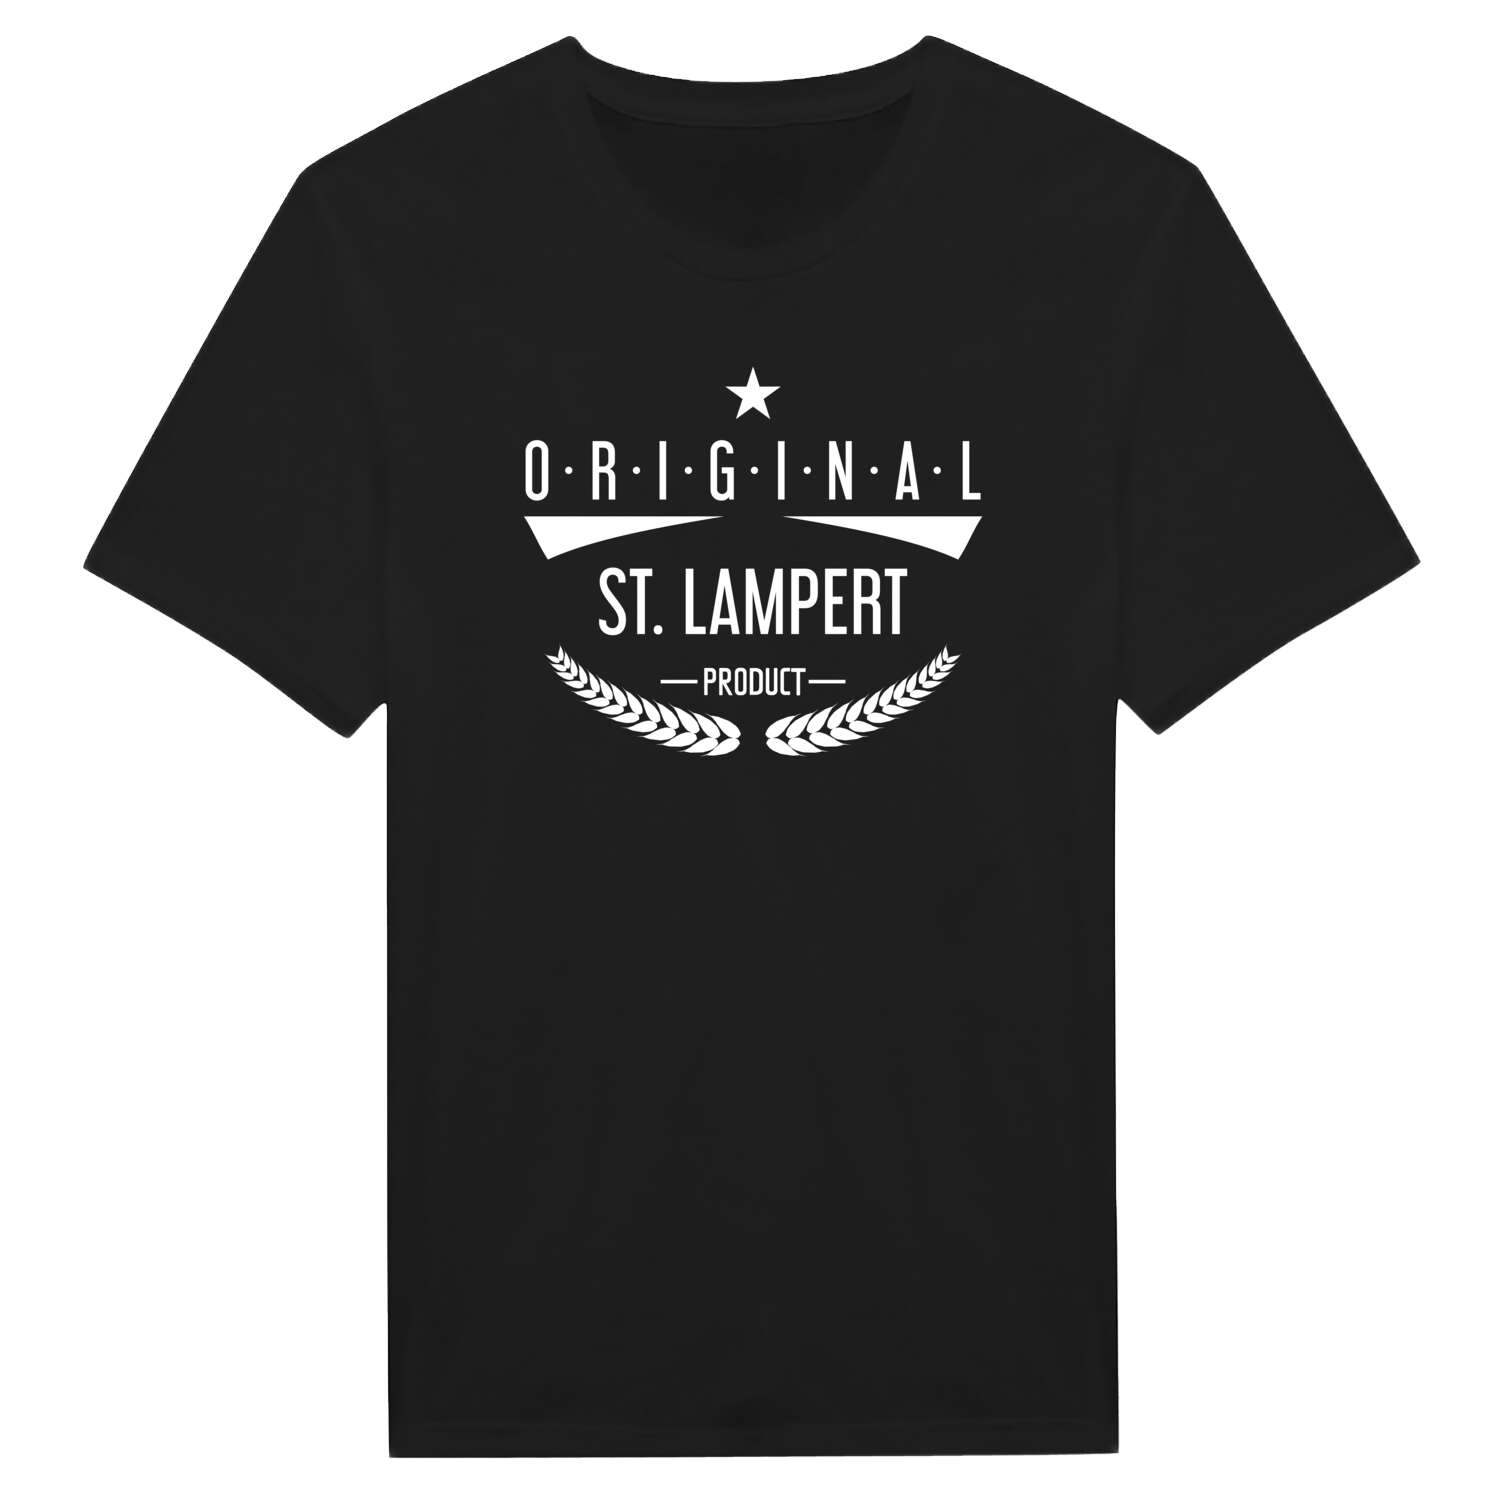 St. Lampert T-Shirt »Original Product«